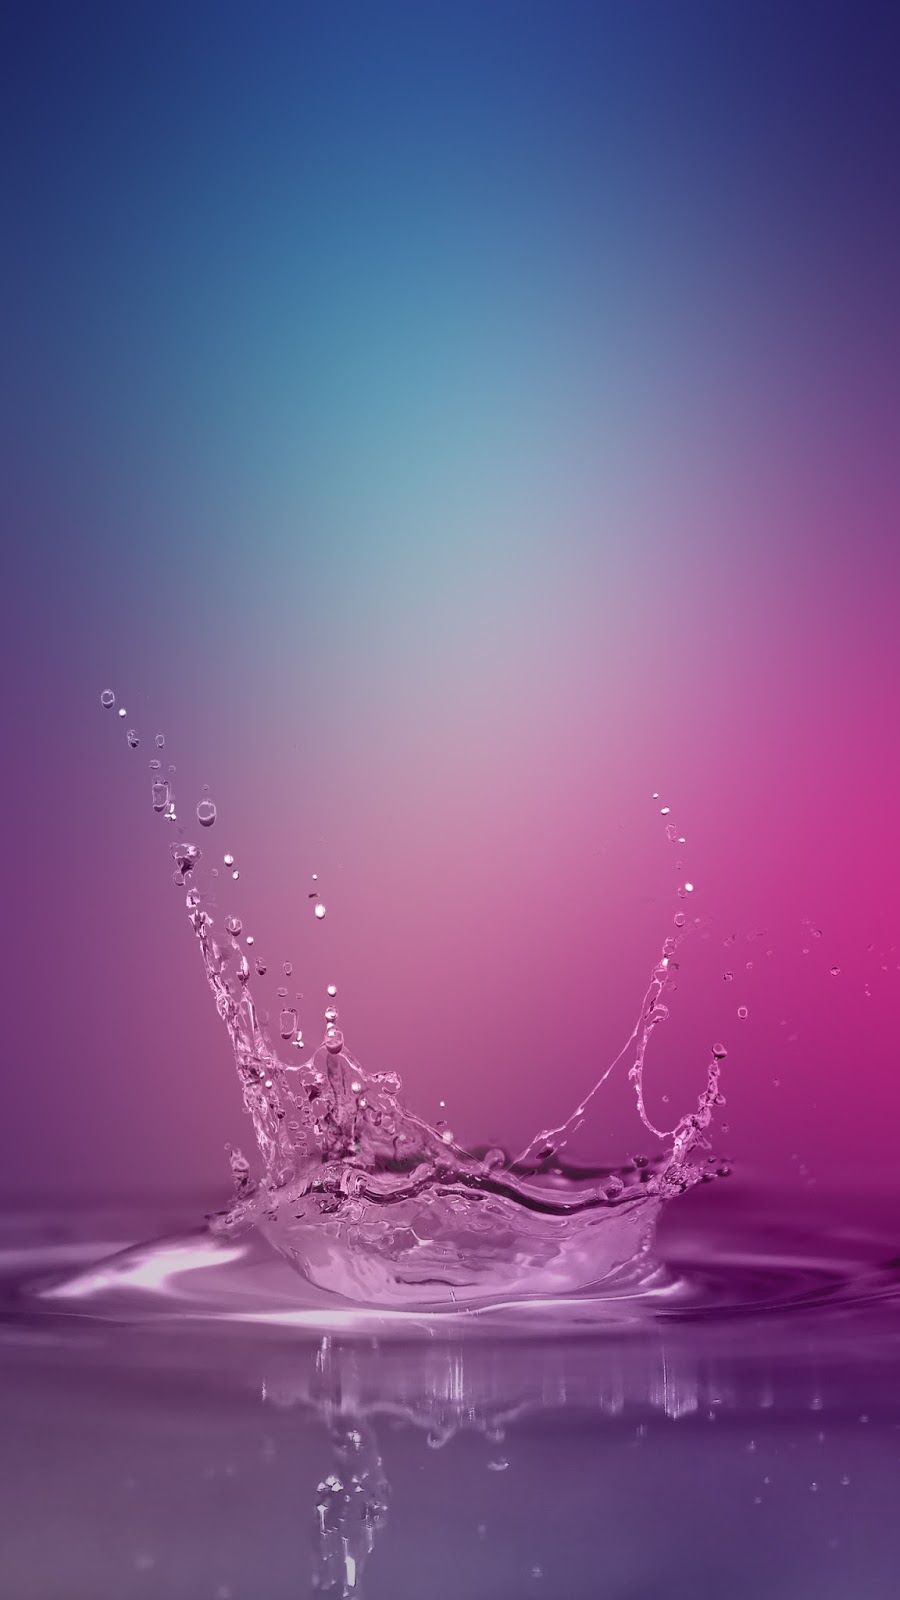 Water Splash Wallpaper Galaxy S7 Edge Phone